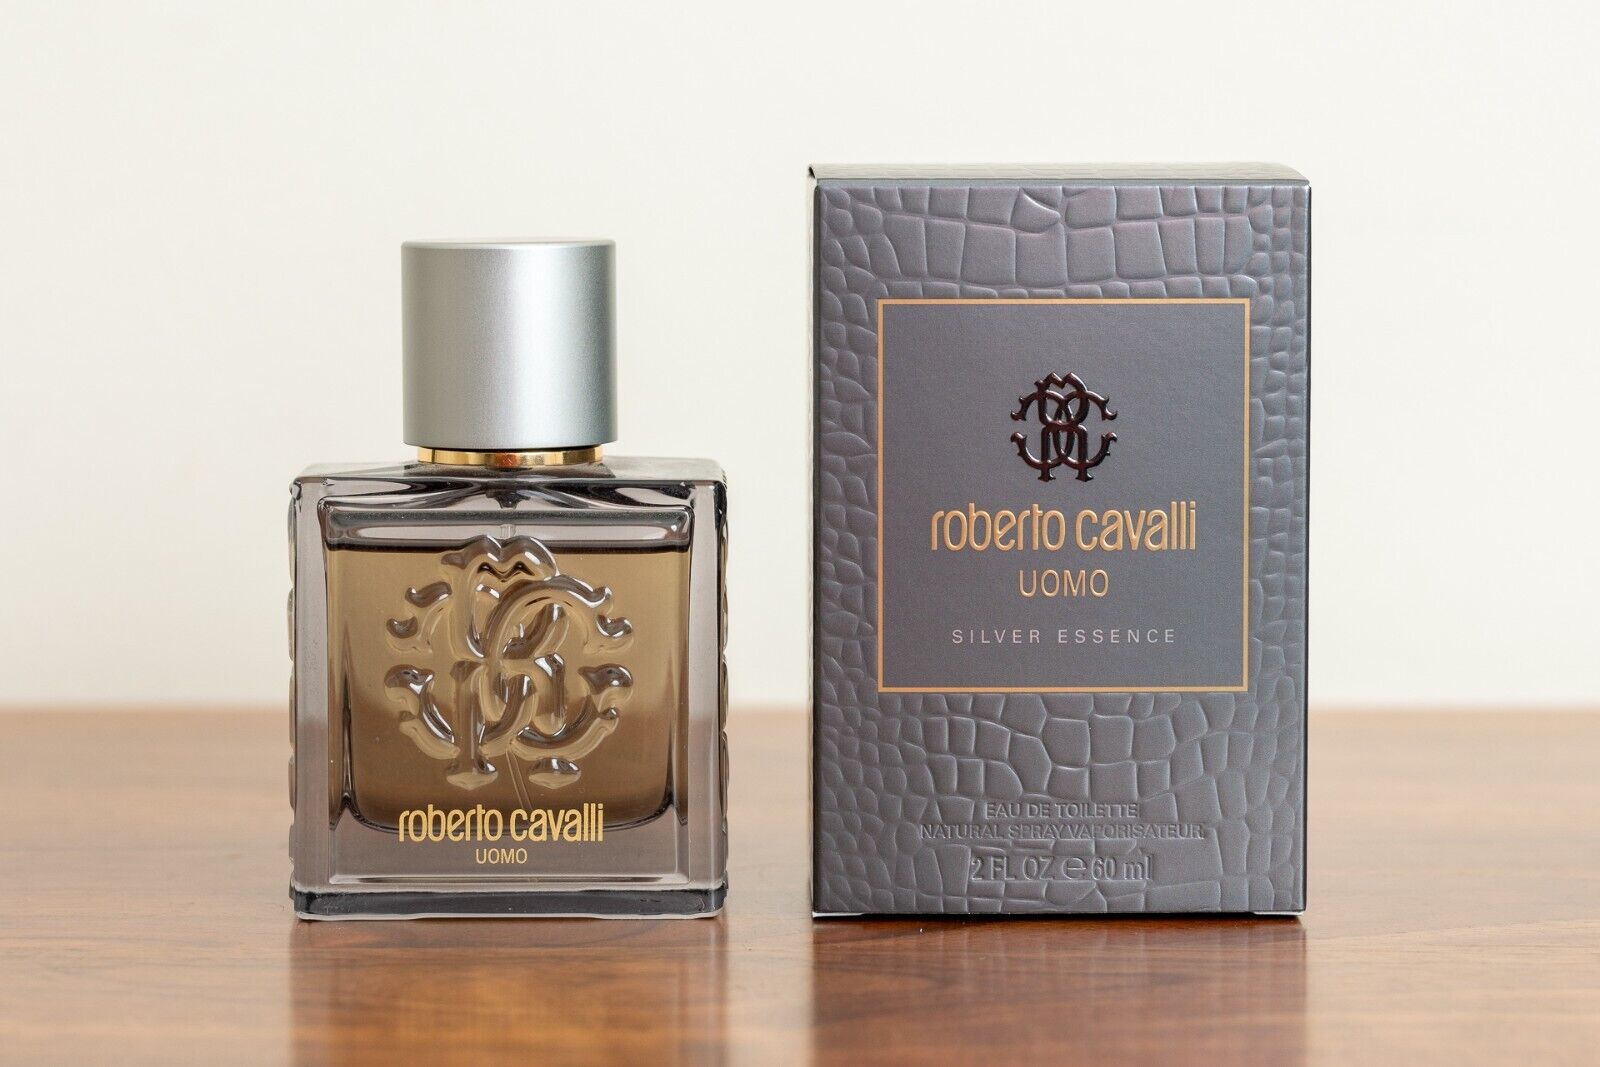 Roberto Cavalli Uomo Silver Essence 2 oz, 60 ml, Discontinued